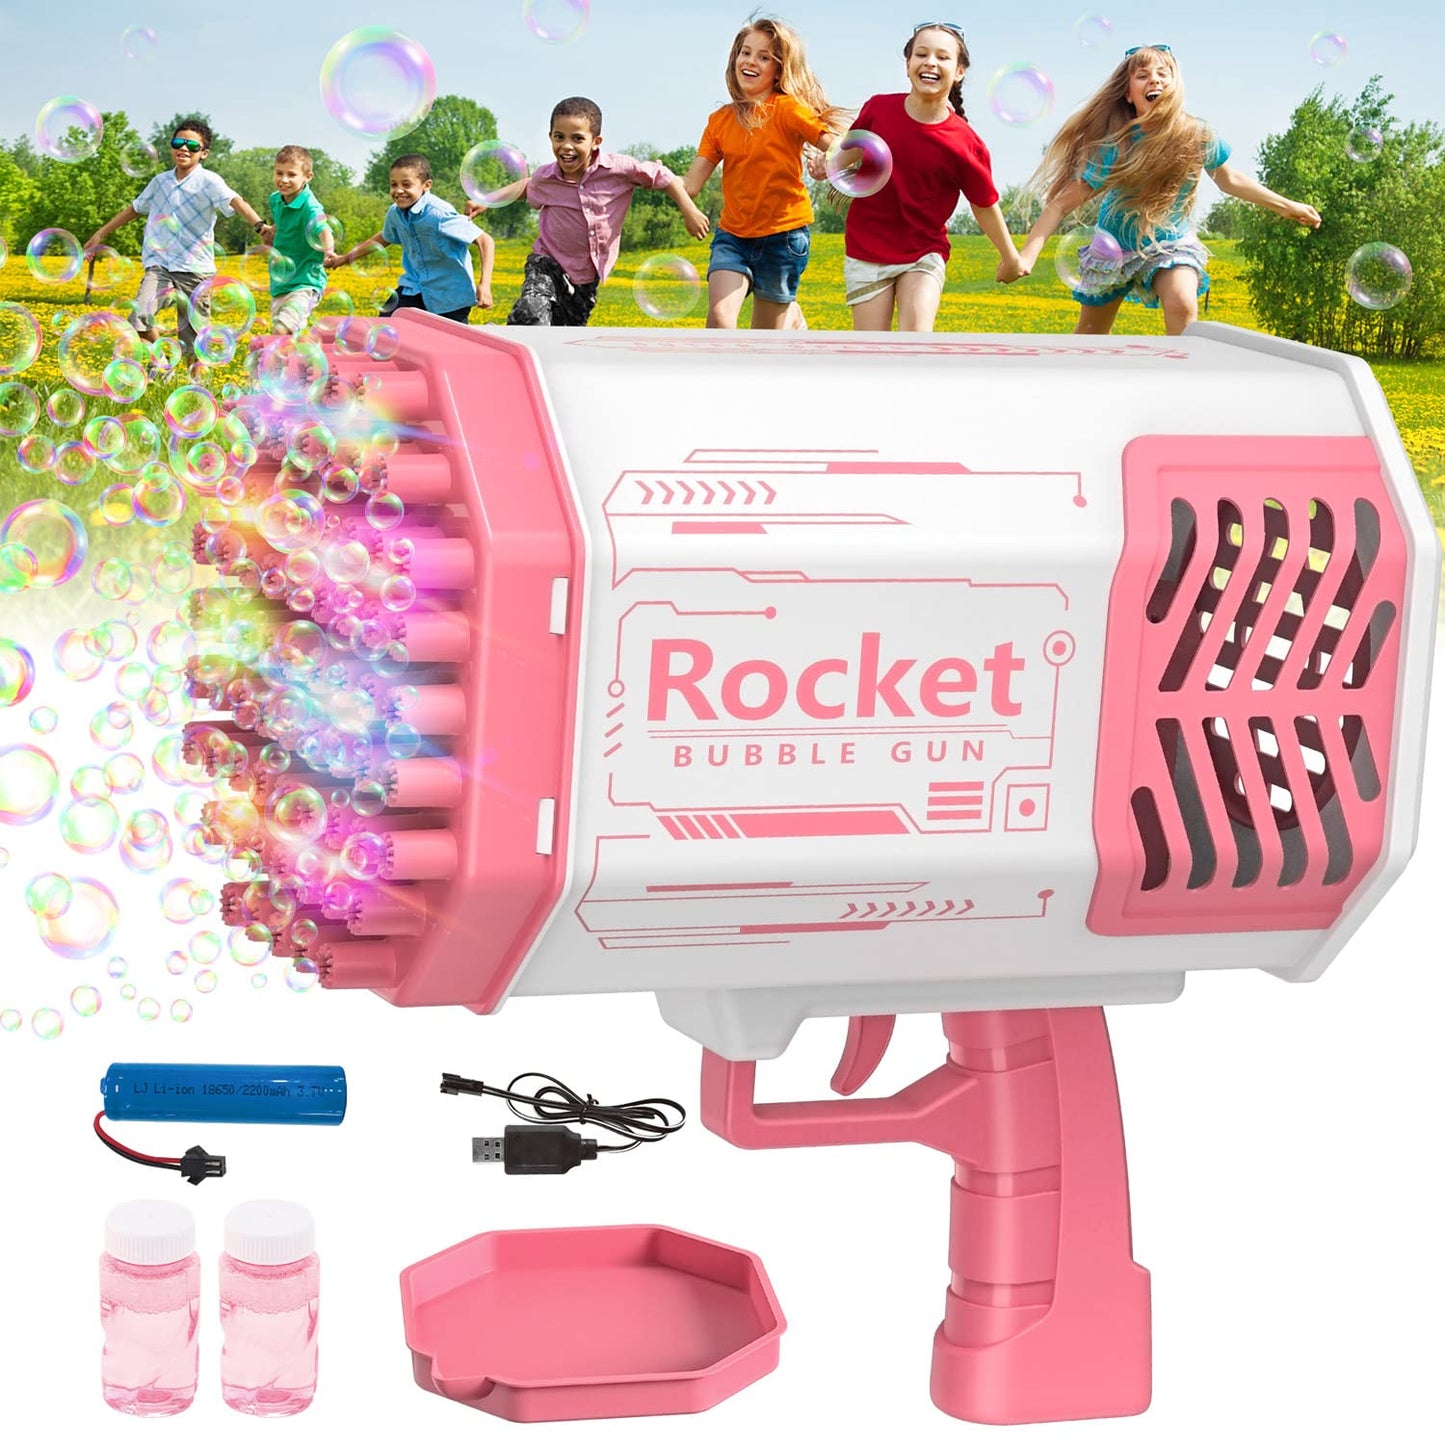 69 Holes Bubble Maker Bubble Gun For Kids with LED light